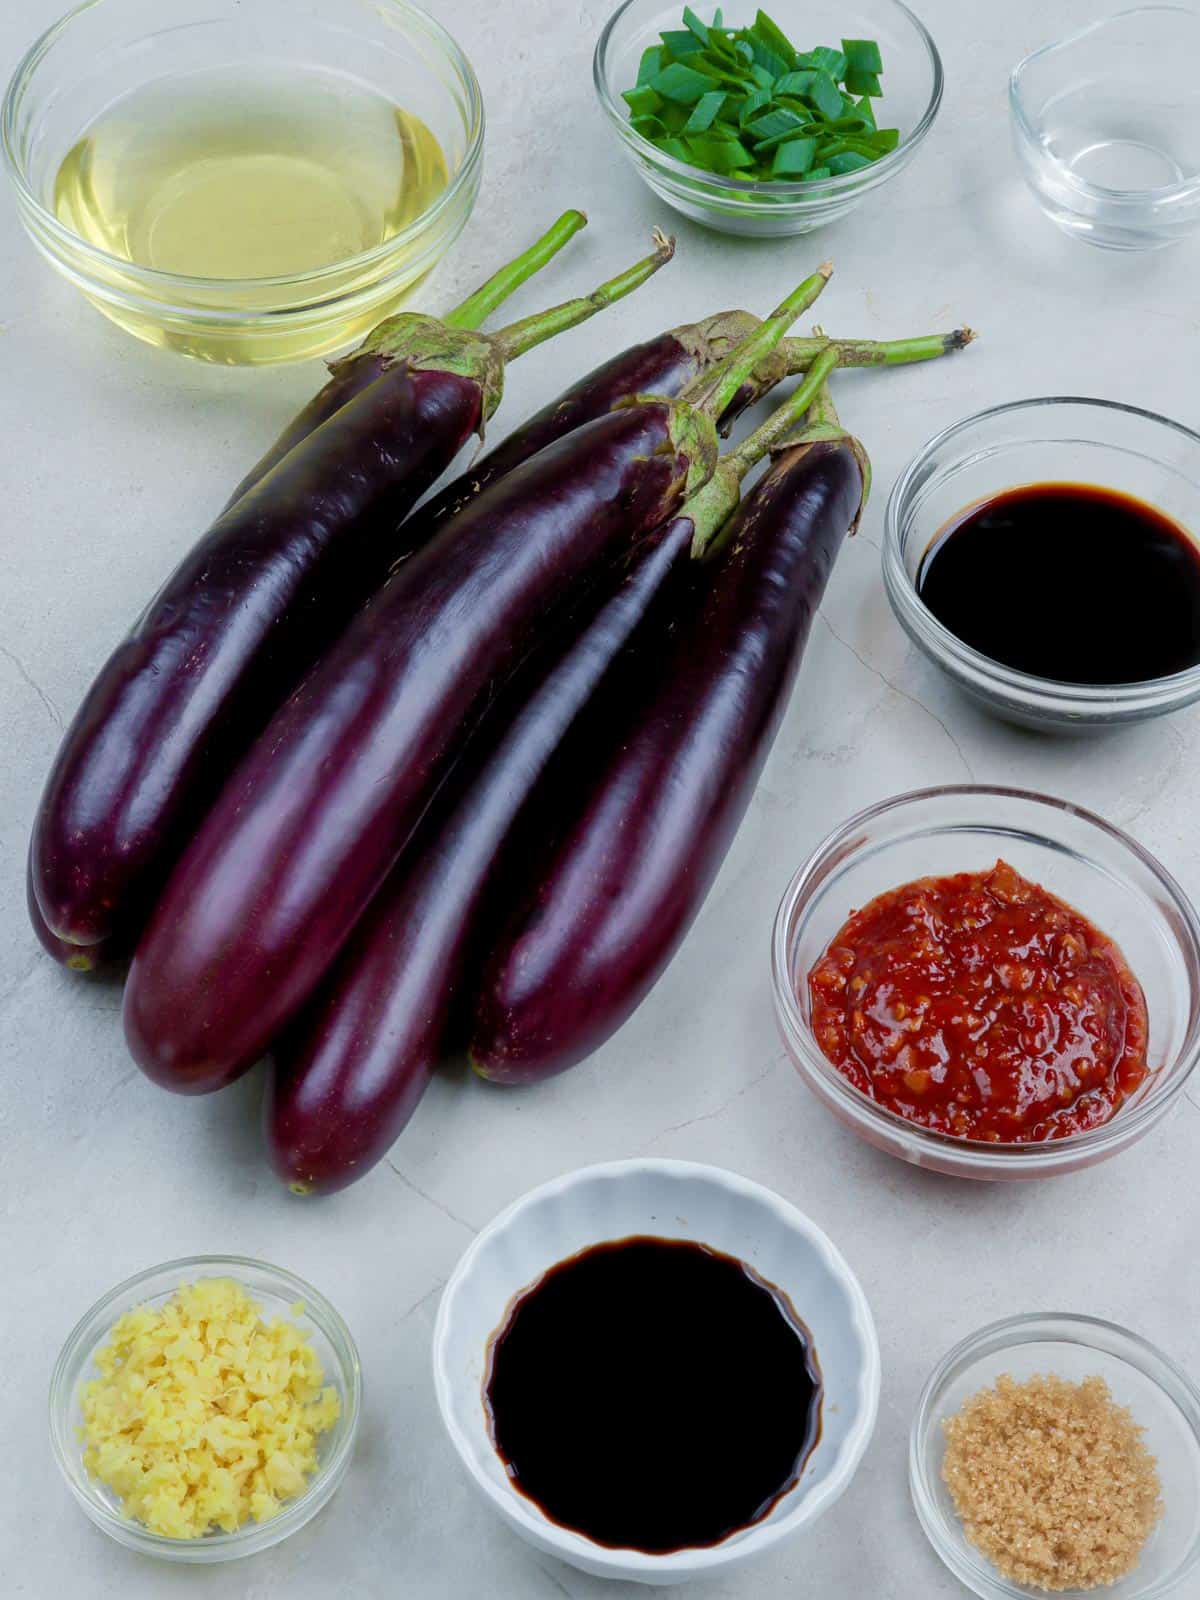 eggplants, chili garlic sauce, soy sauce, balsamic vinegar, ginger, oil, green onions, brown sugar in bowls